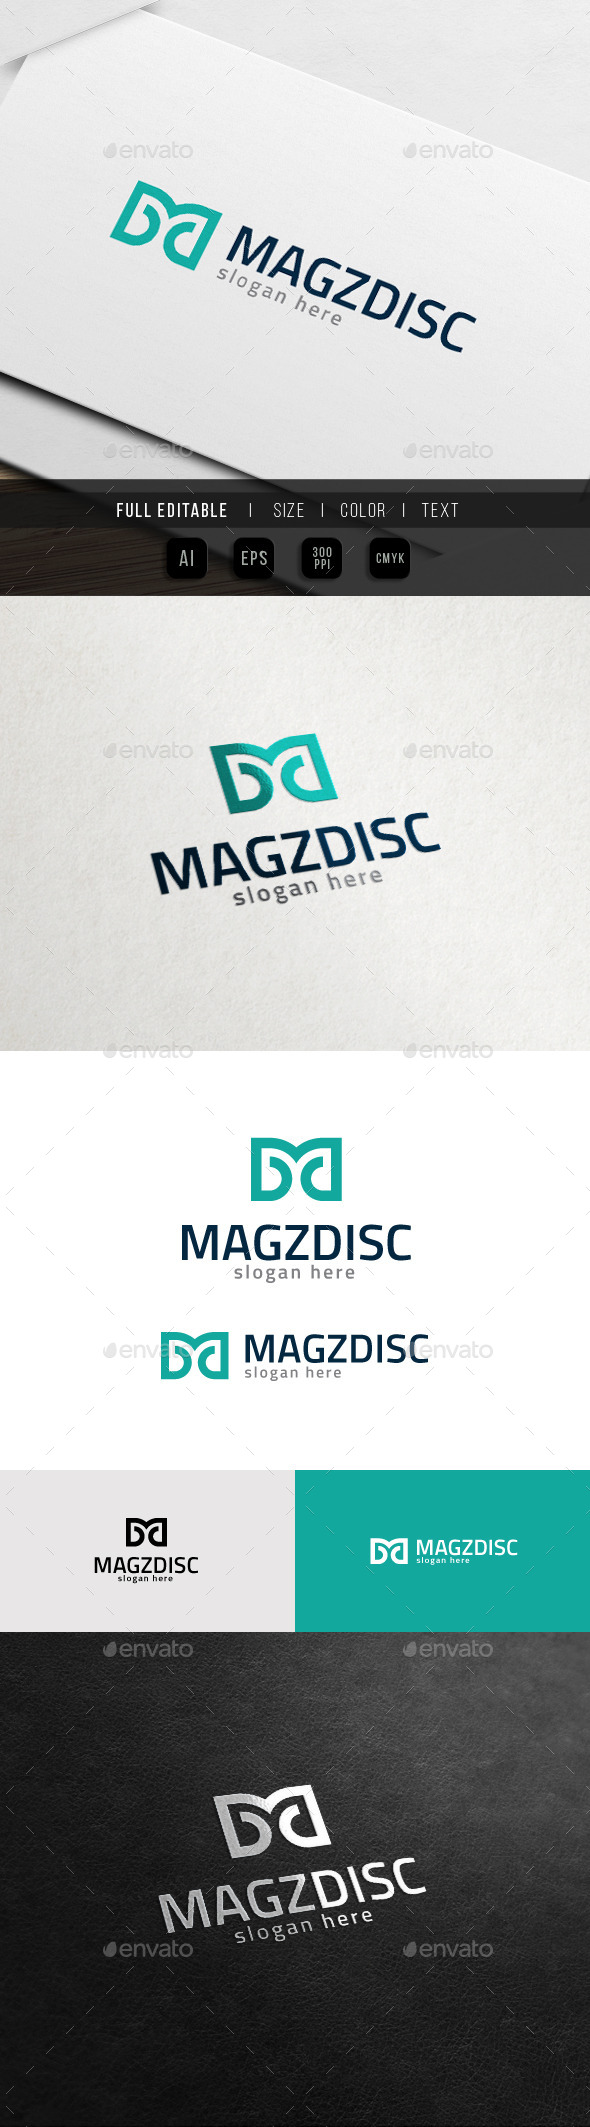 Master Design - Apparel Brand - M / MD Logo